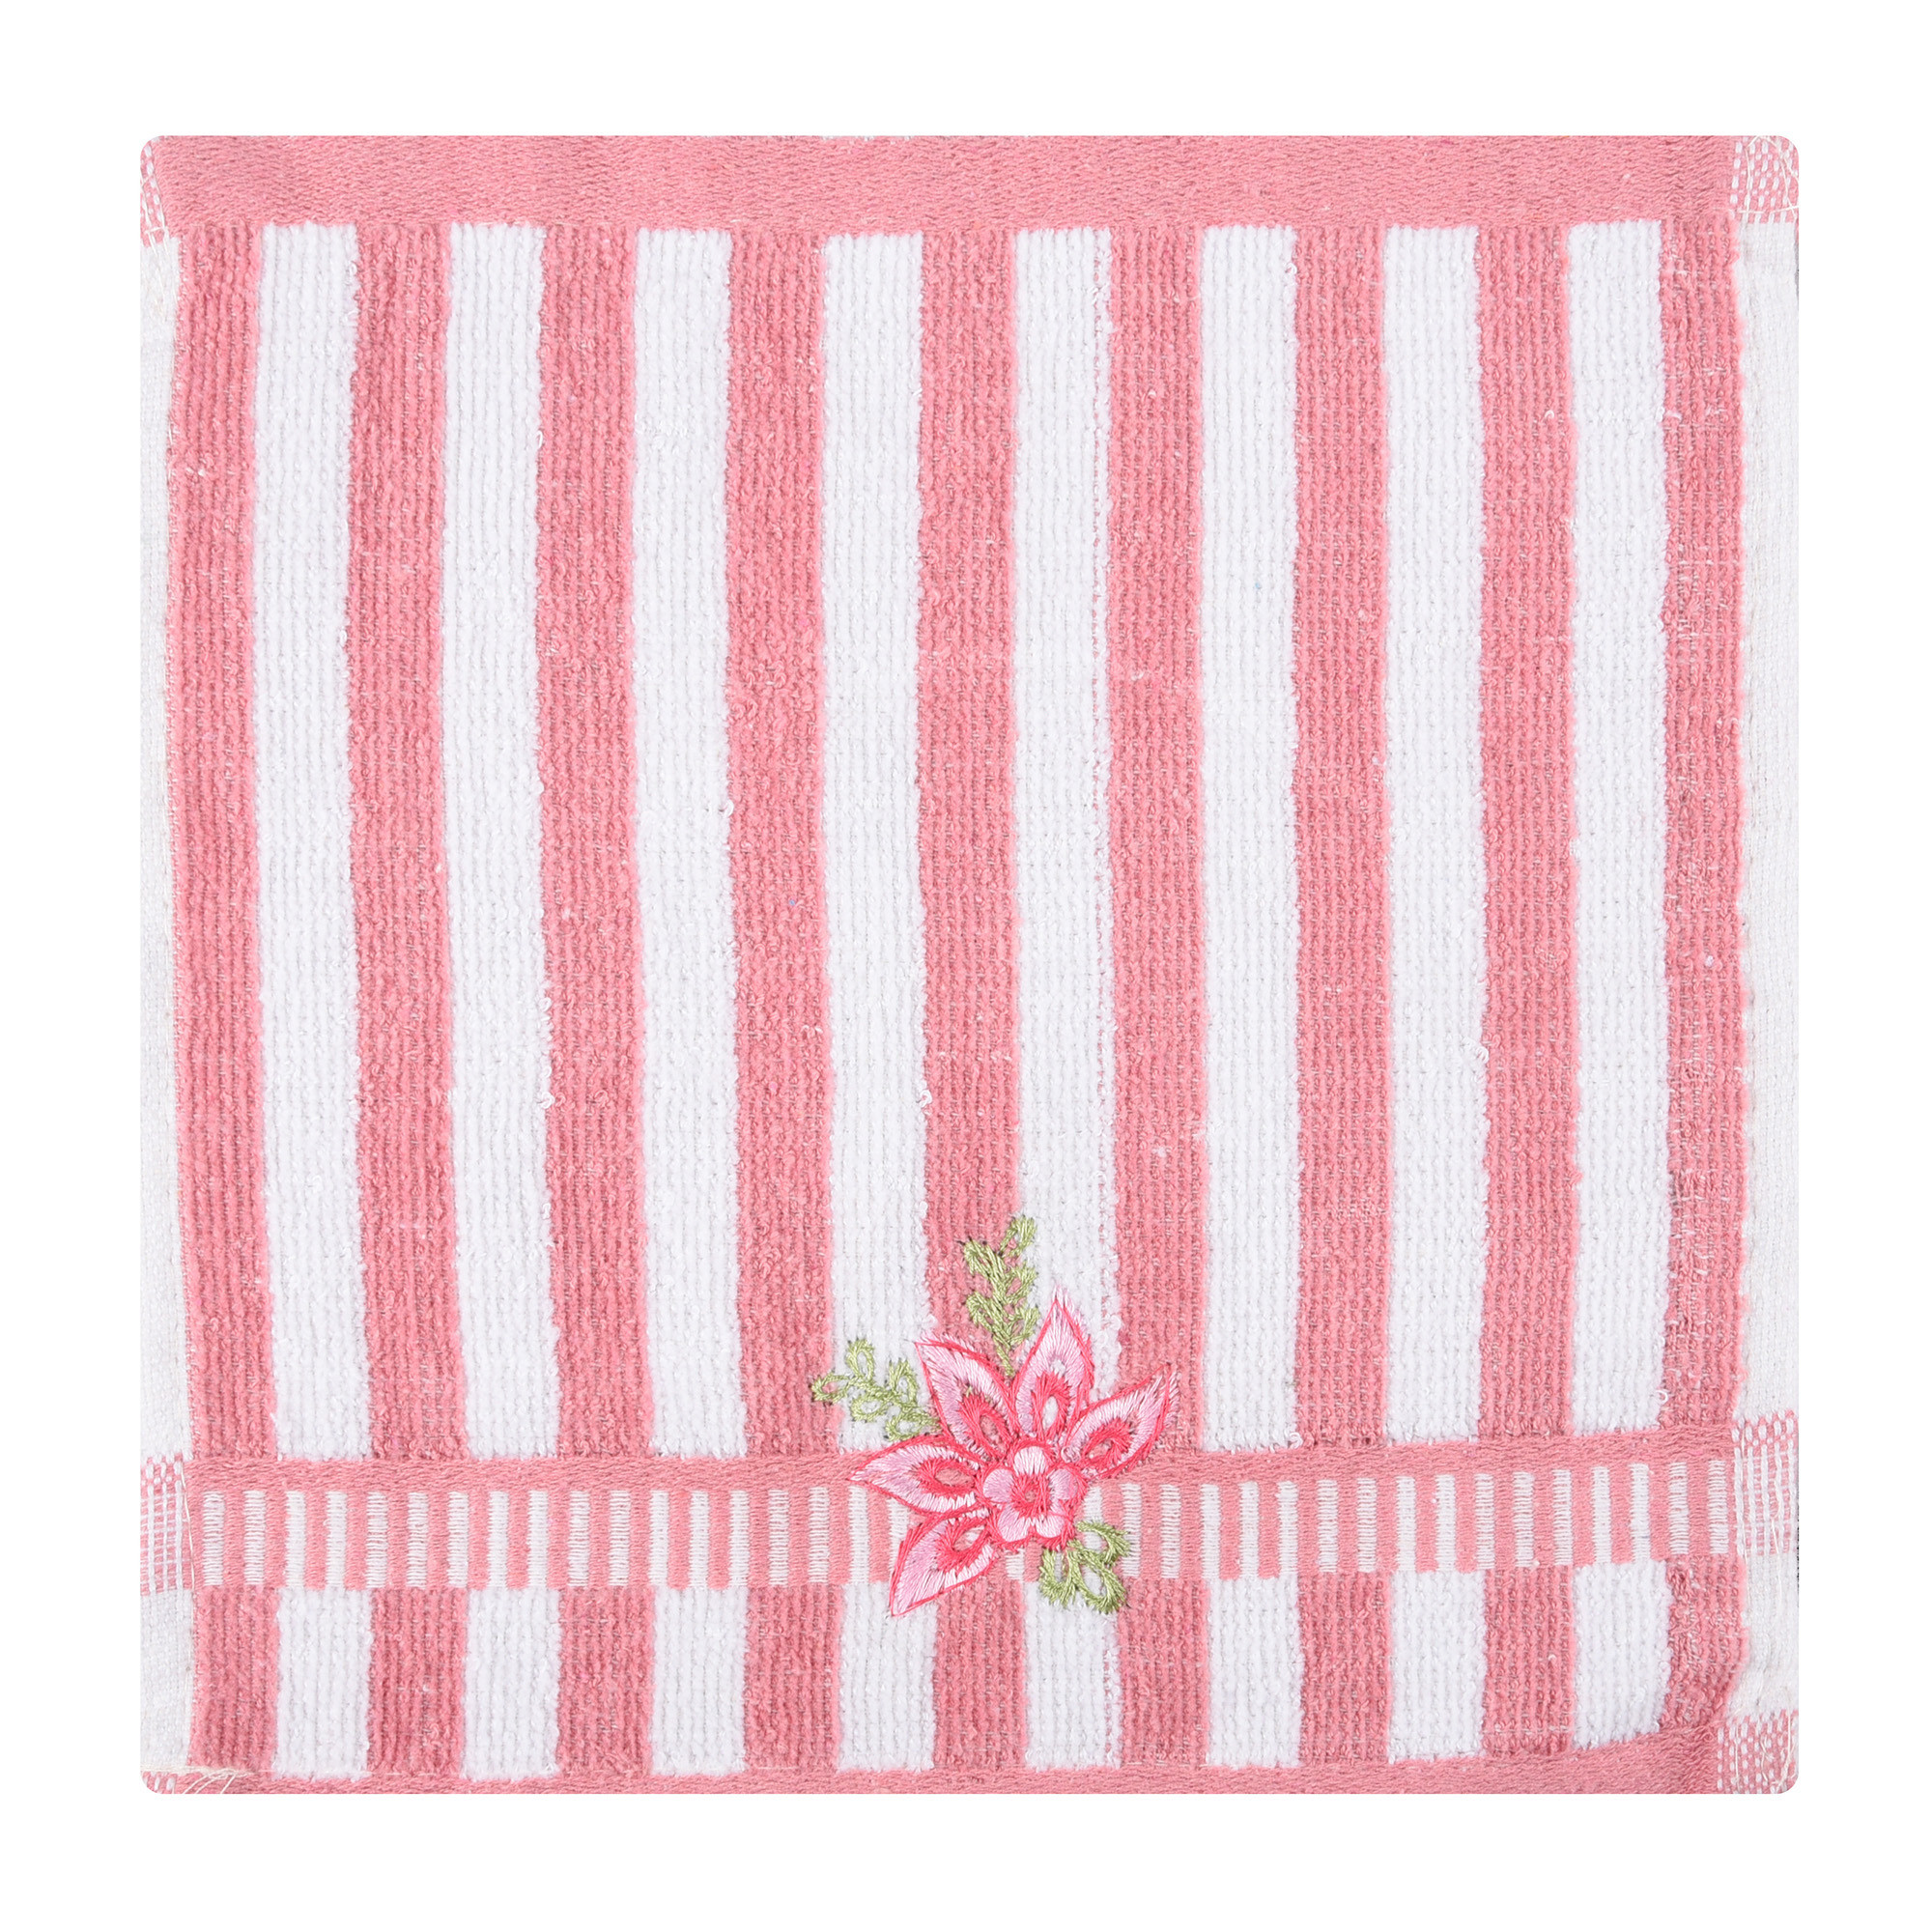 Kuber Industries Handkerchief | Velvet Face Towel | Face Towel | Sweat Absorbent Handkerchief | Lining Embroidary | Face Towel Hankies|Multicolor